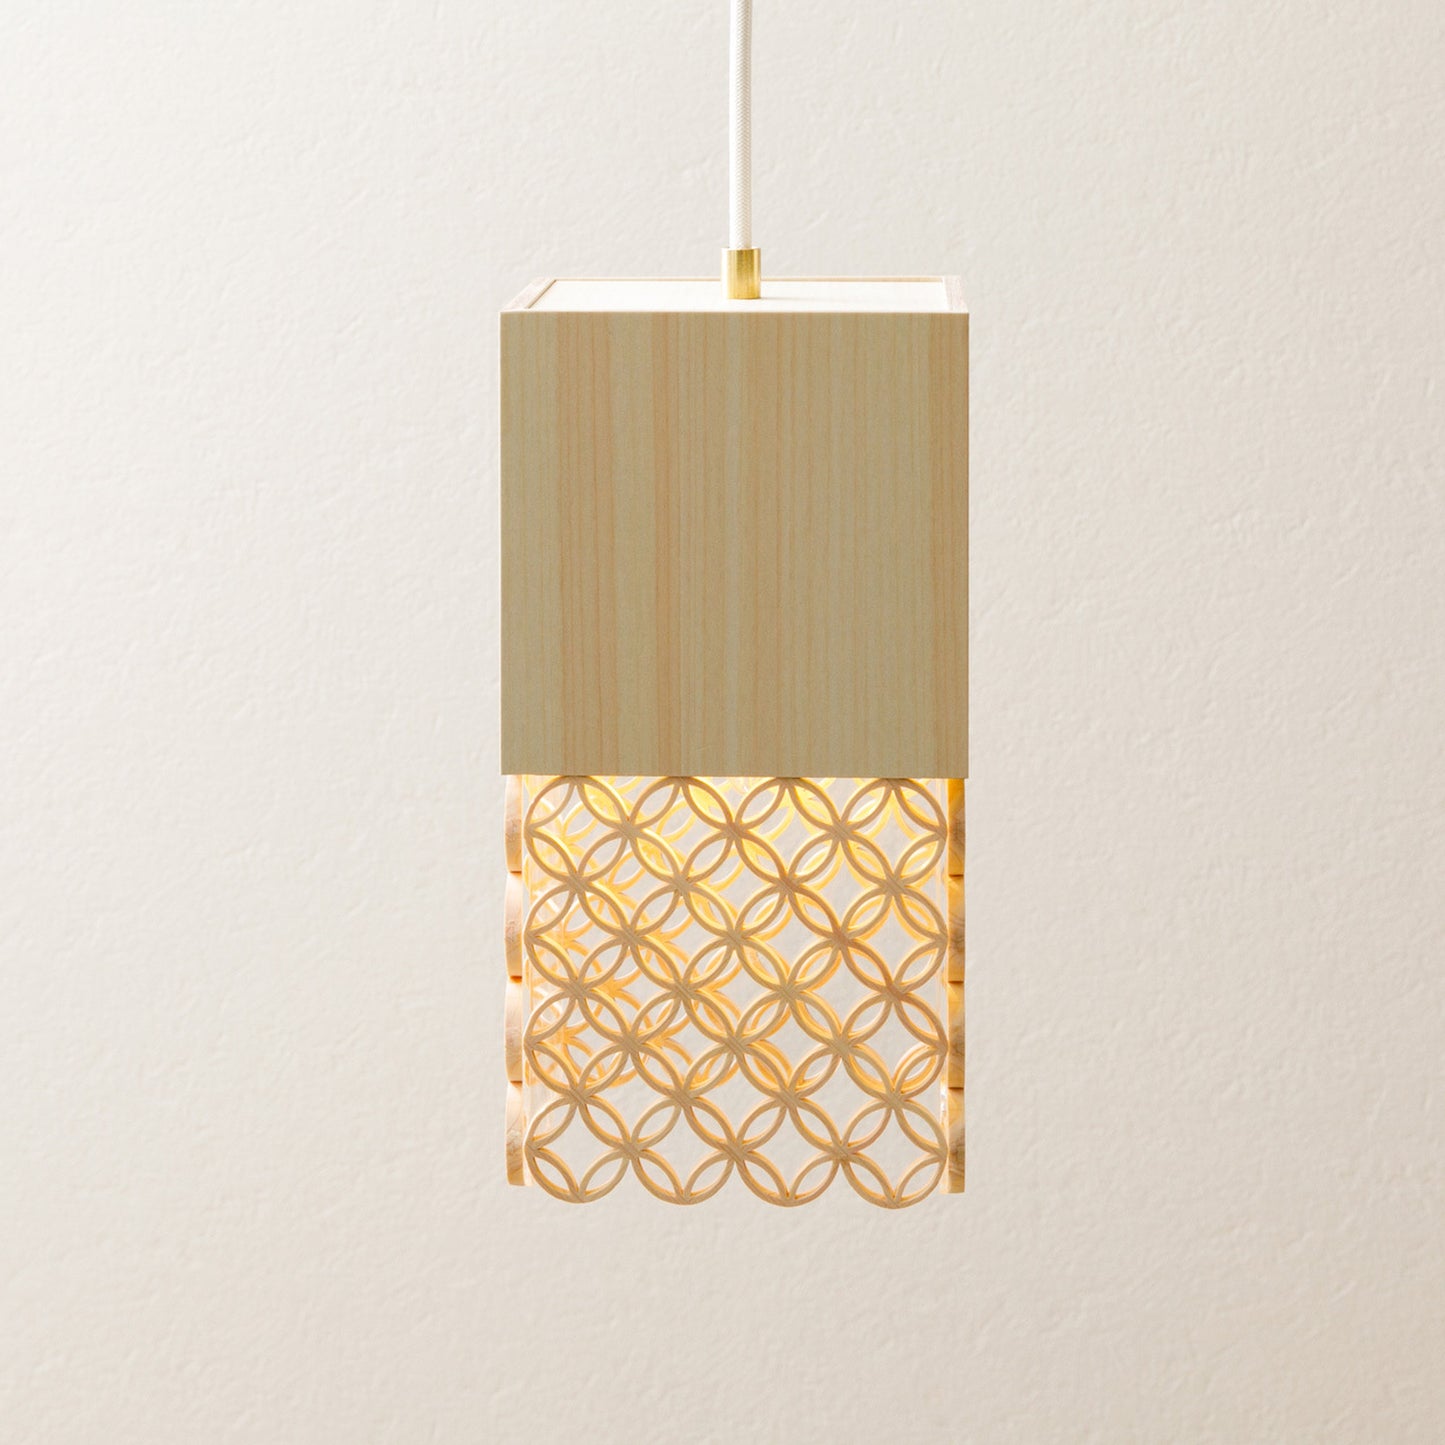 Hanakumiko pendant light lampshade (4 rows)